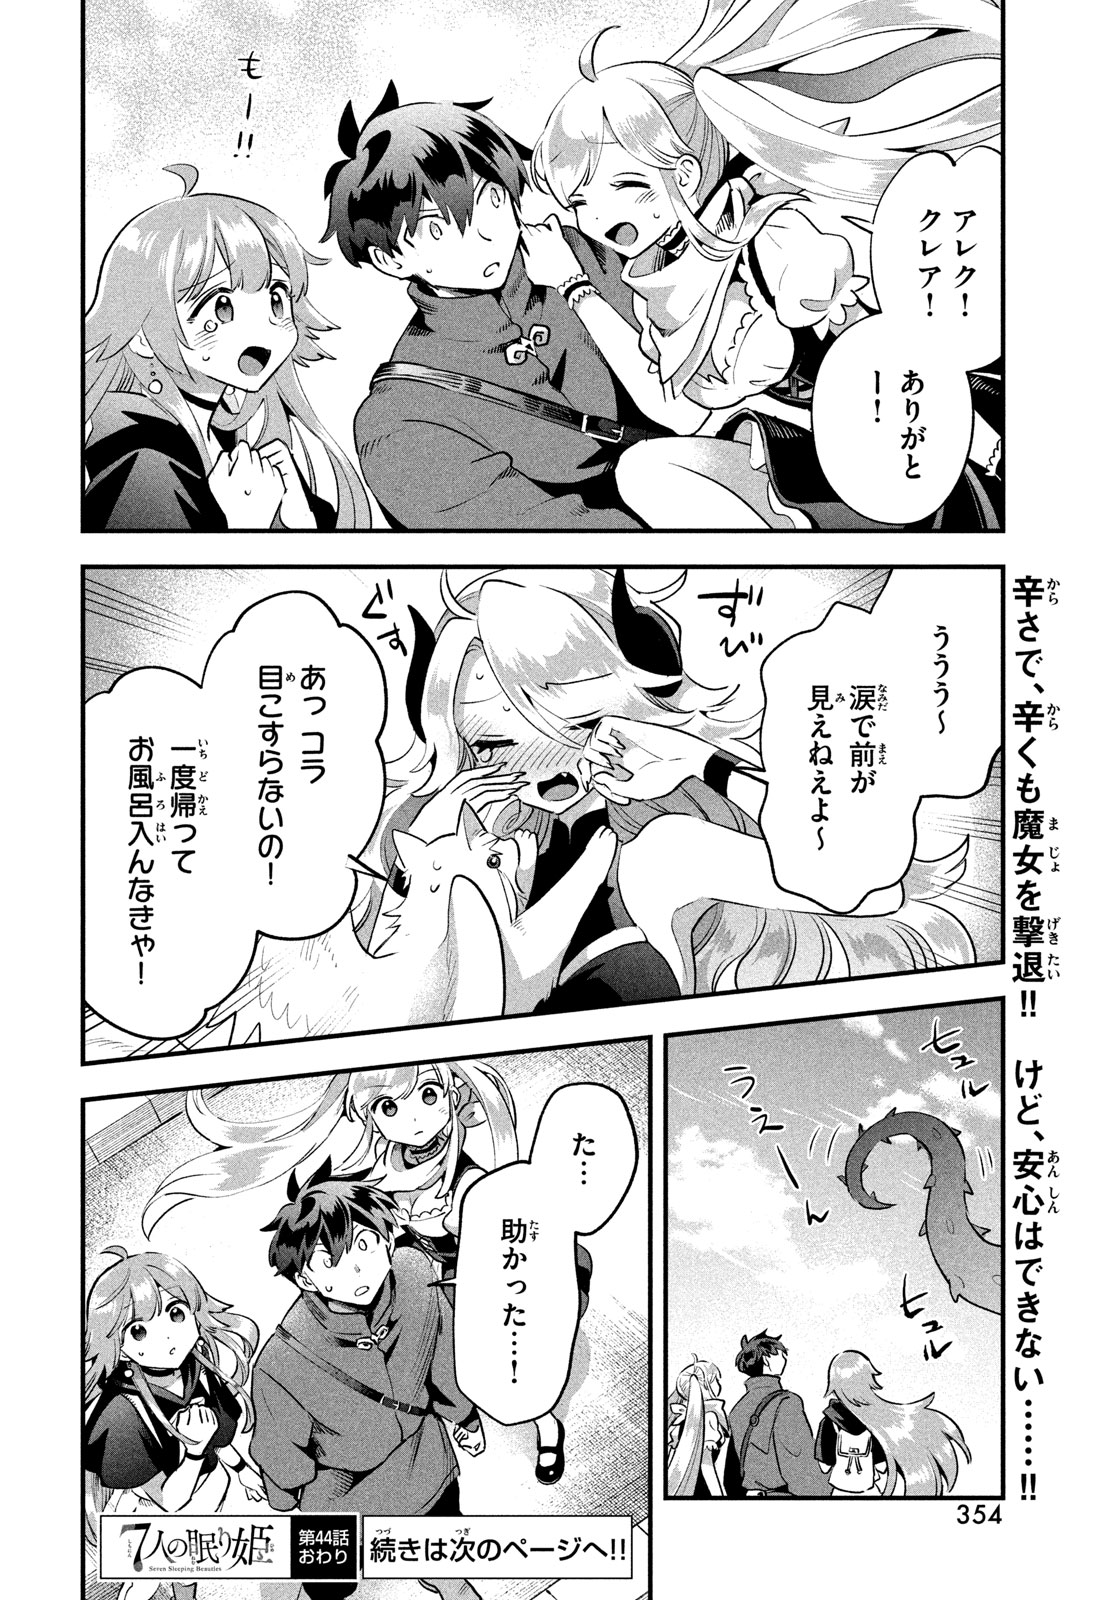 7-nin no Nemuri Hime - Chapter 44 - Page 14